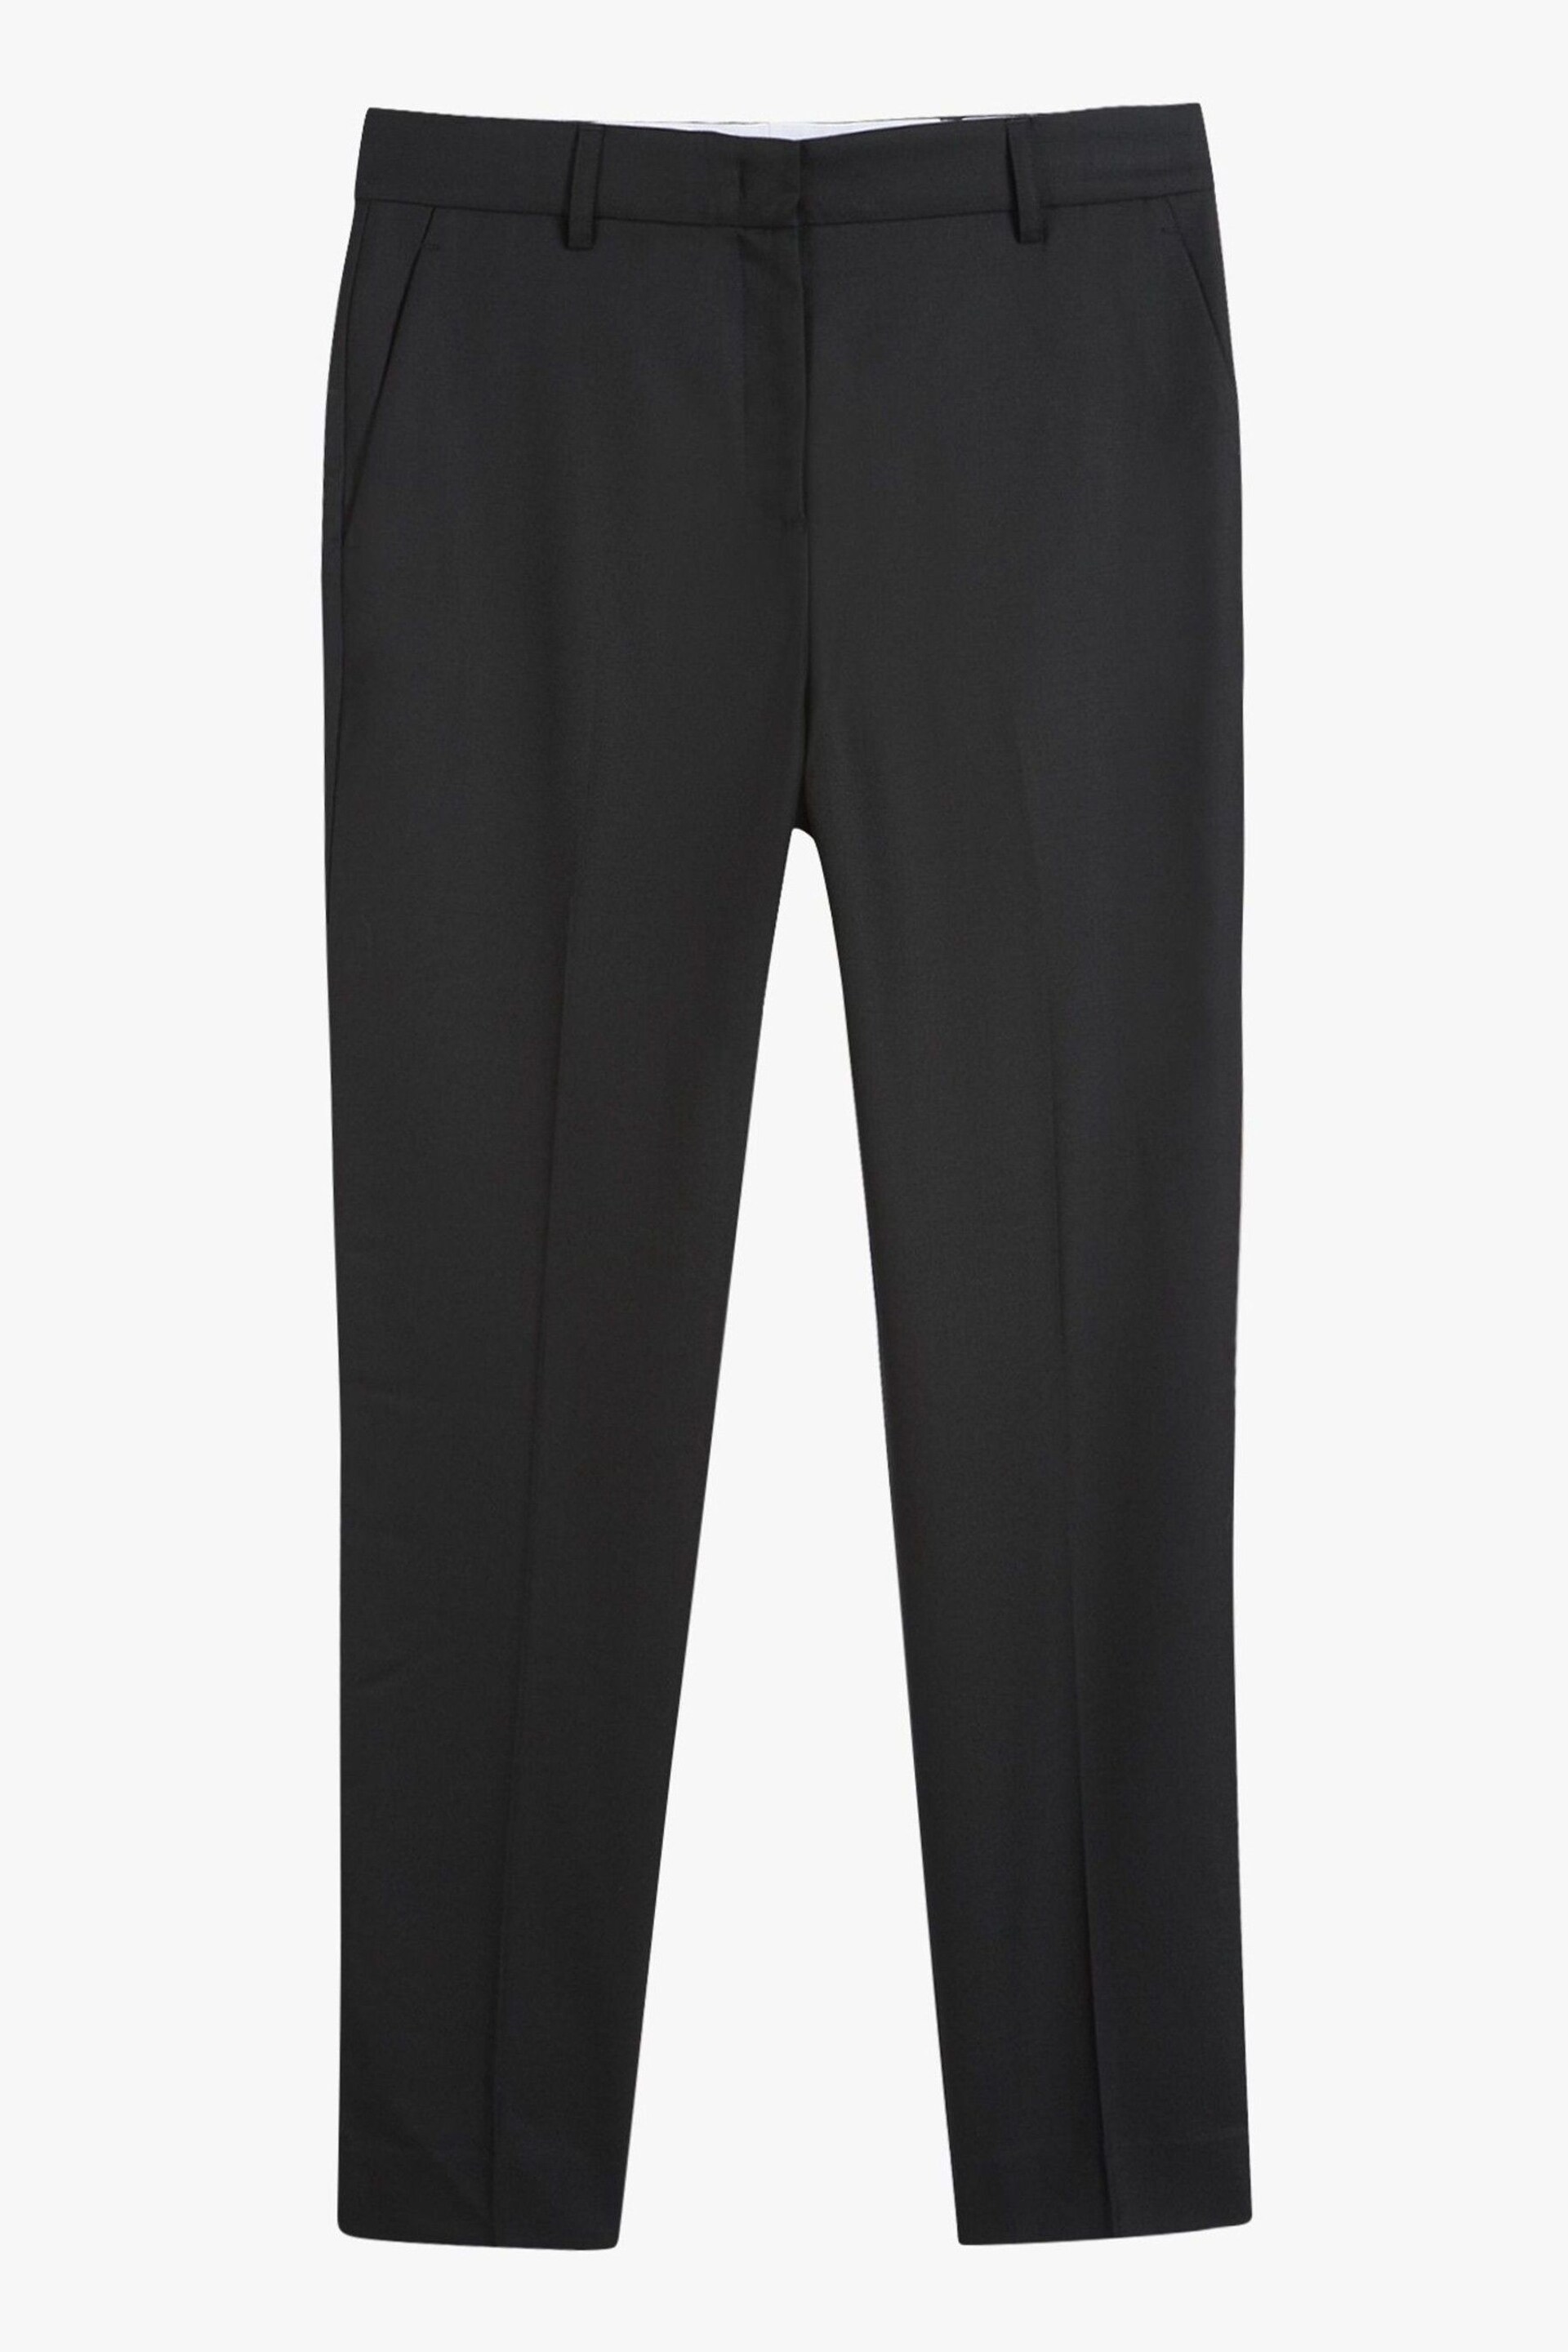 Hush Black Amanda Cropped Suit Trousers - Image 5 of 5